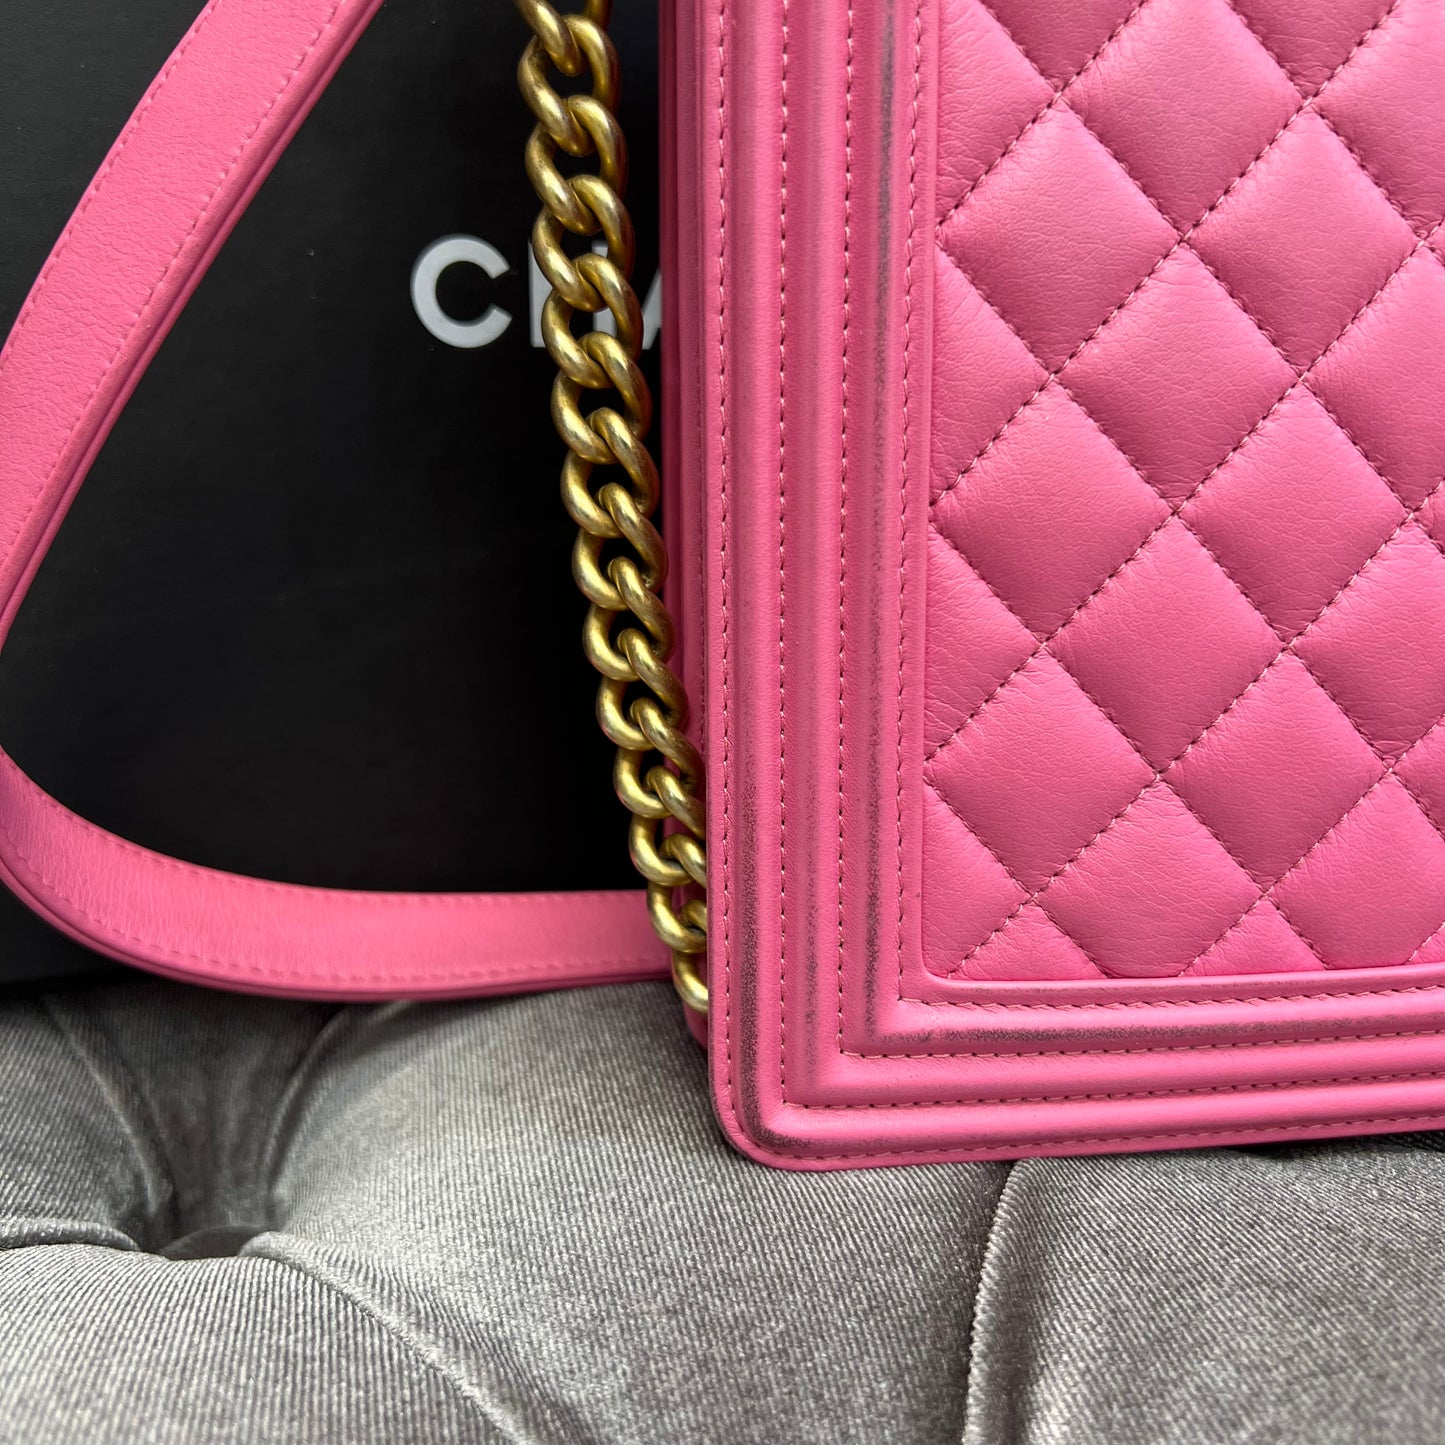 Chanel 19C Flap Bag Pink